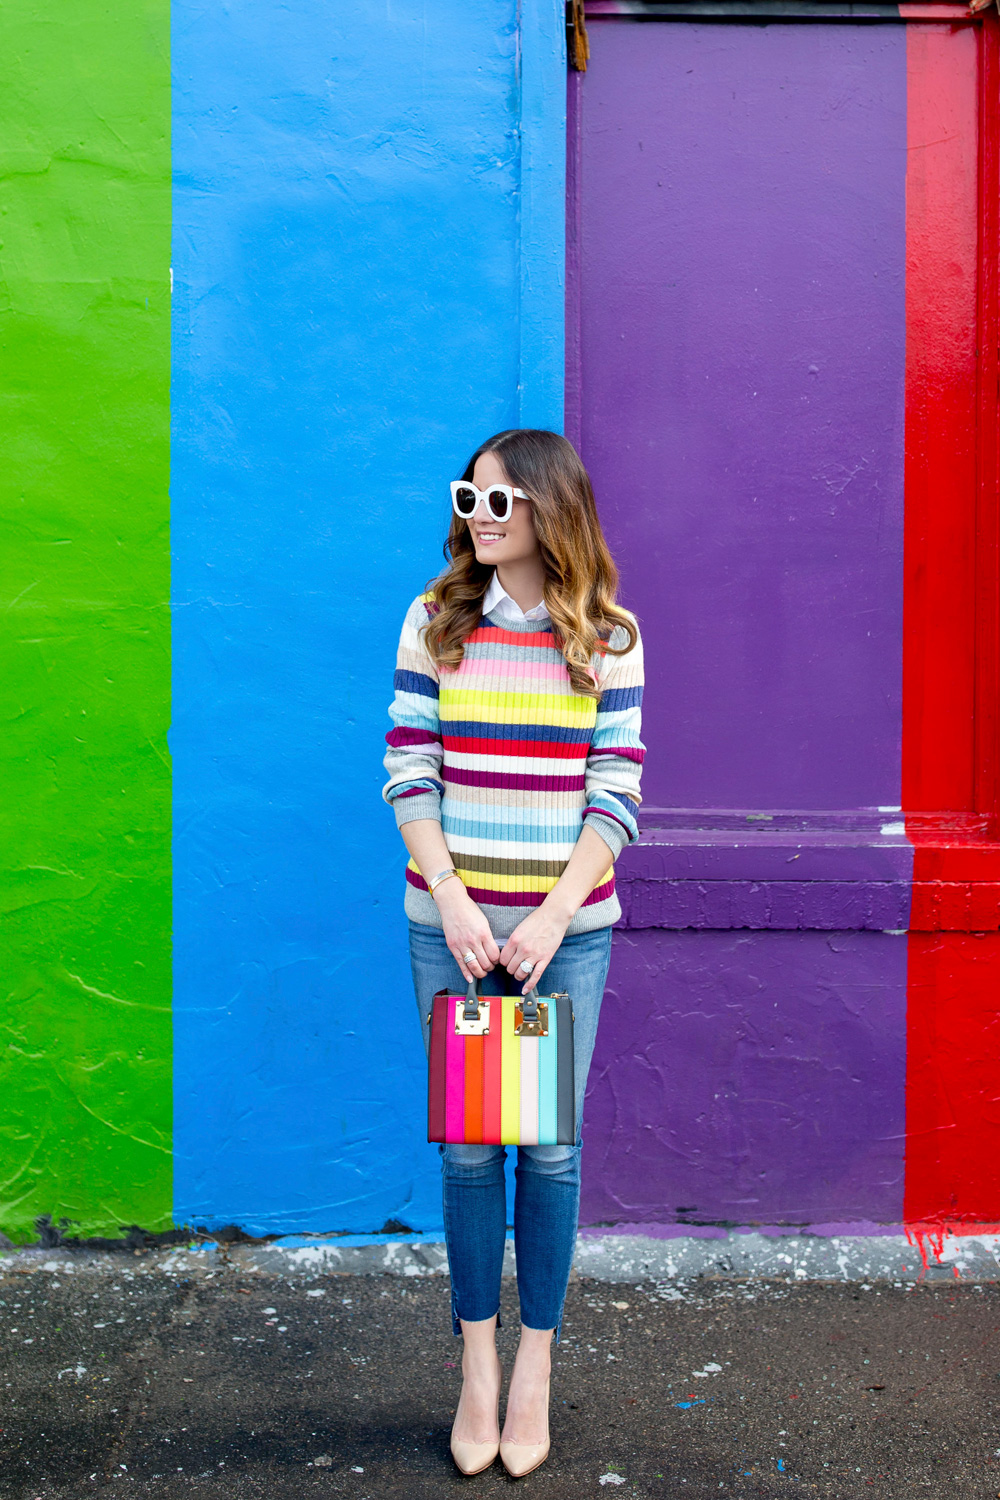 Multicolor Stripe Sweater